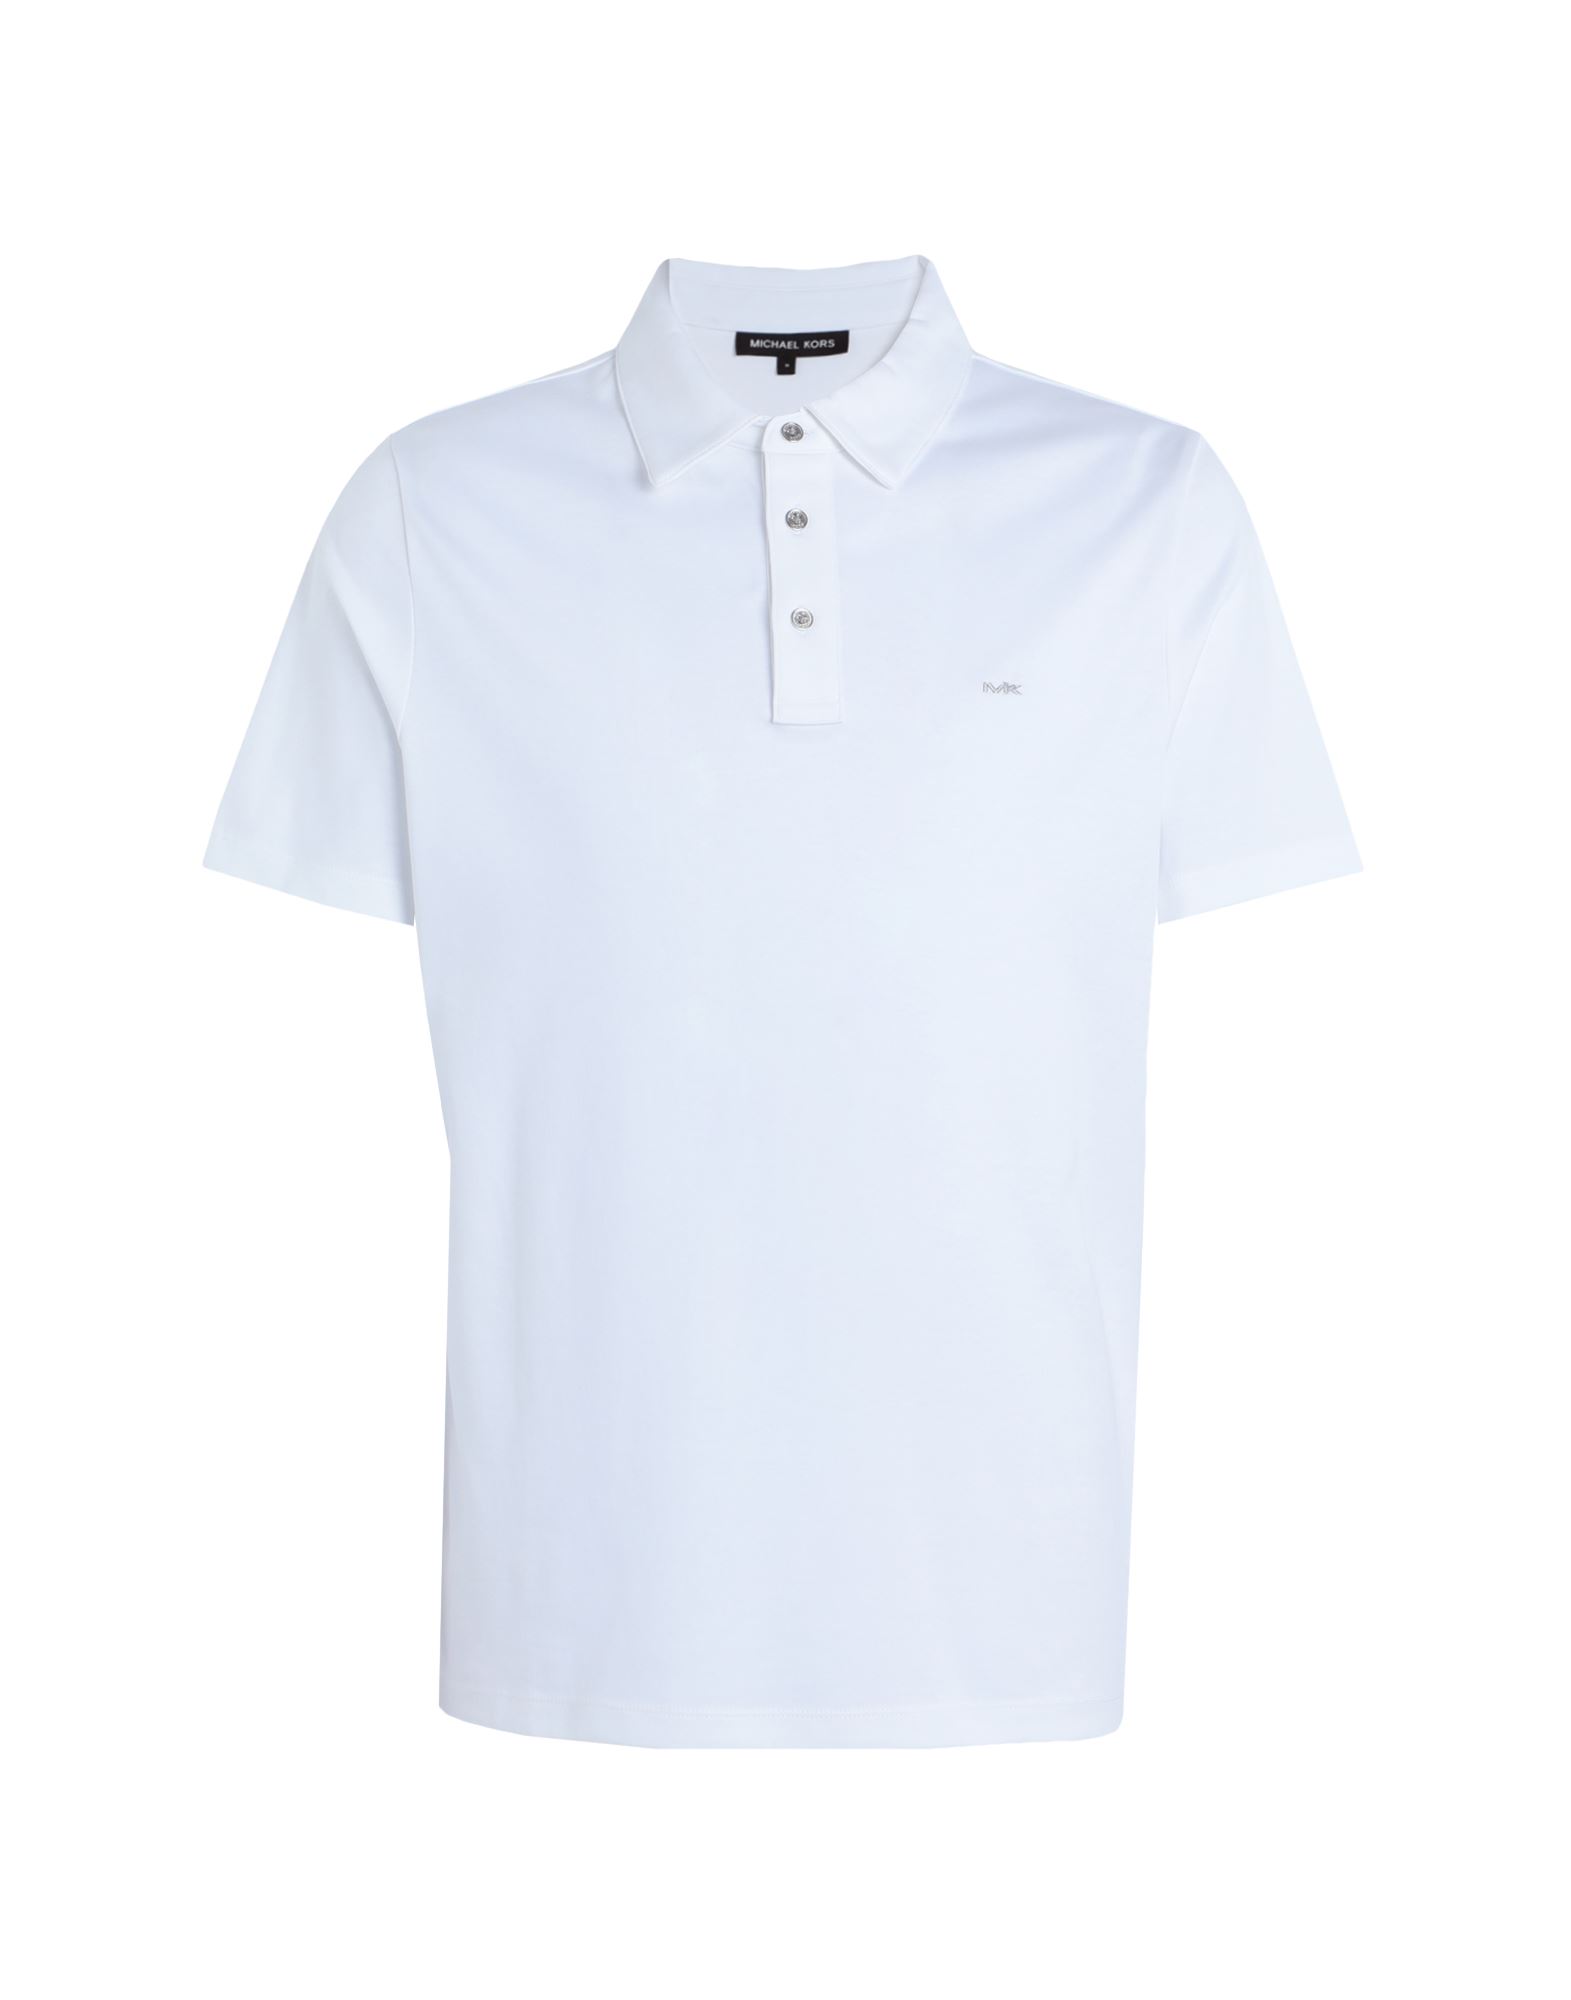 Michael Kors Mens Polo Shirts In White